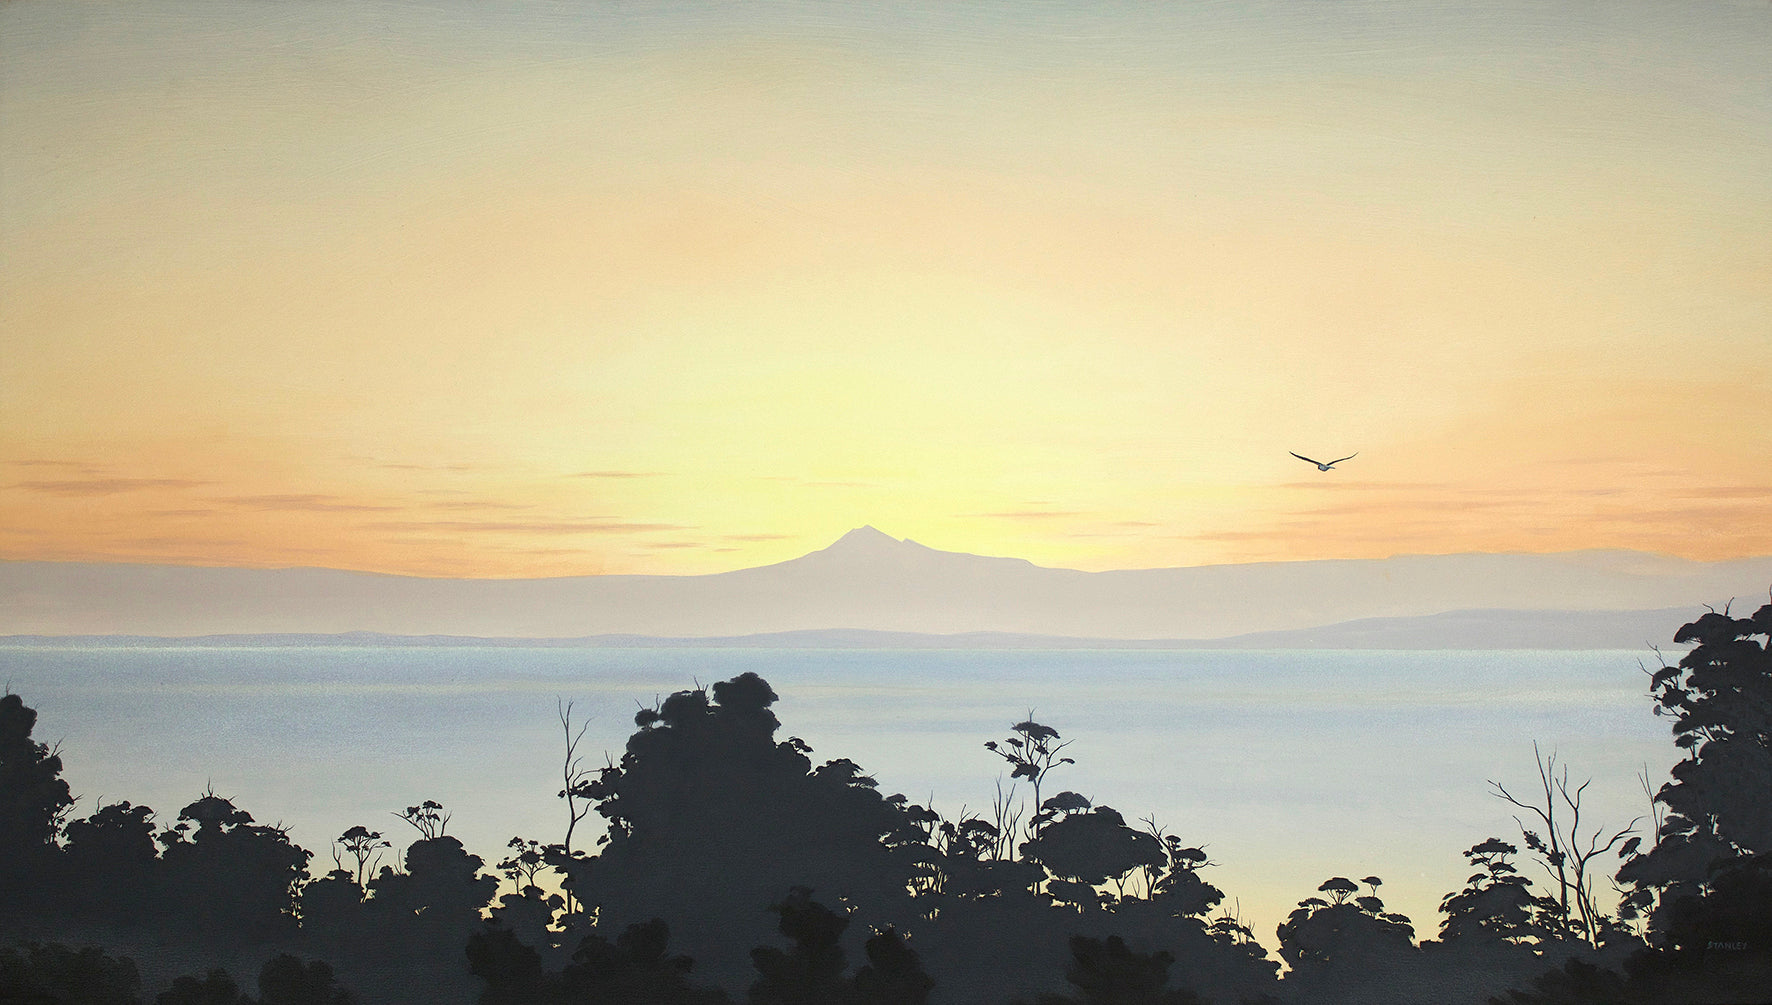 Adamsons Peak Sunset Tasmania with bird